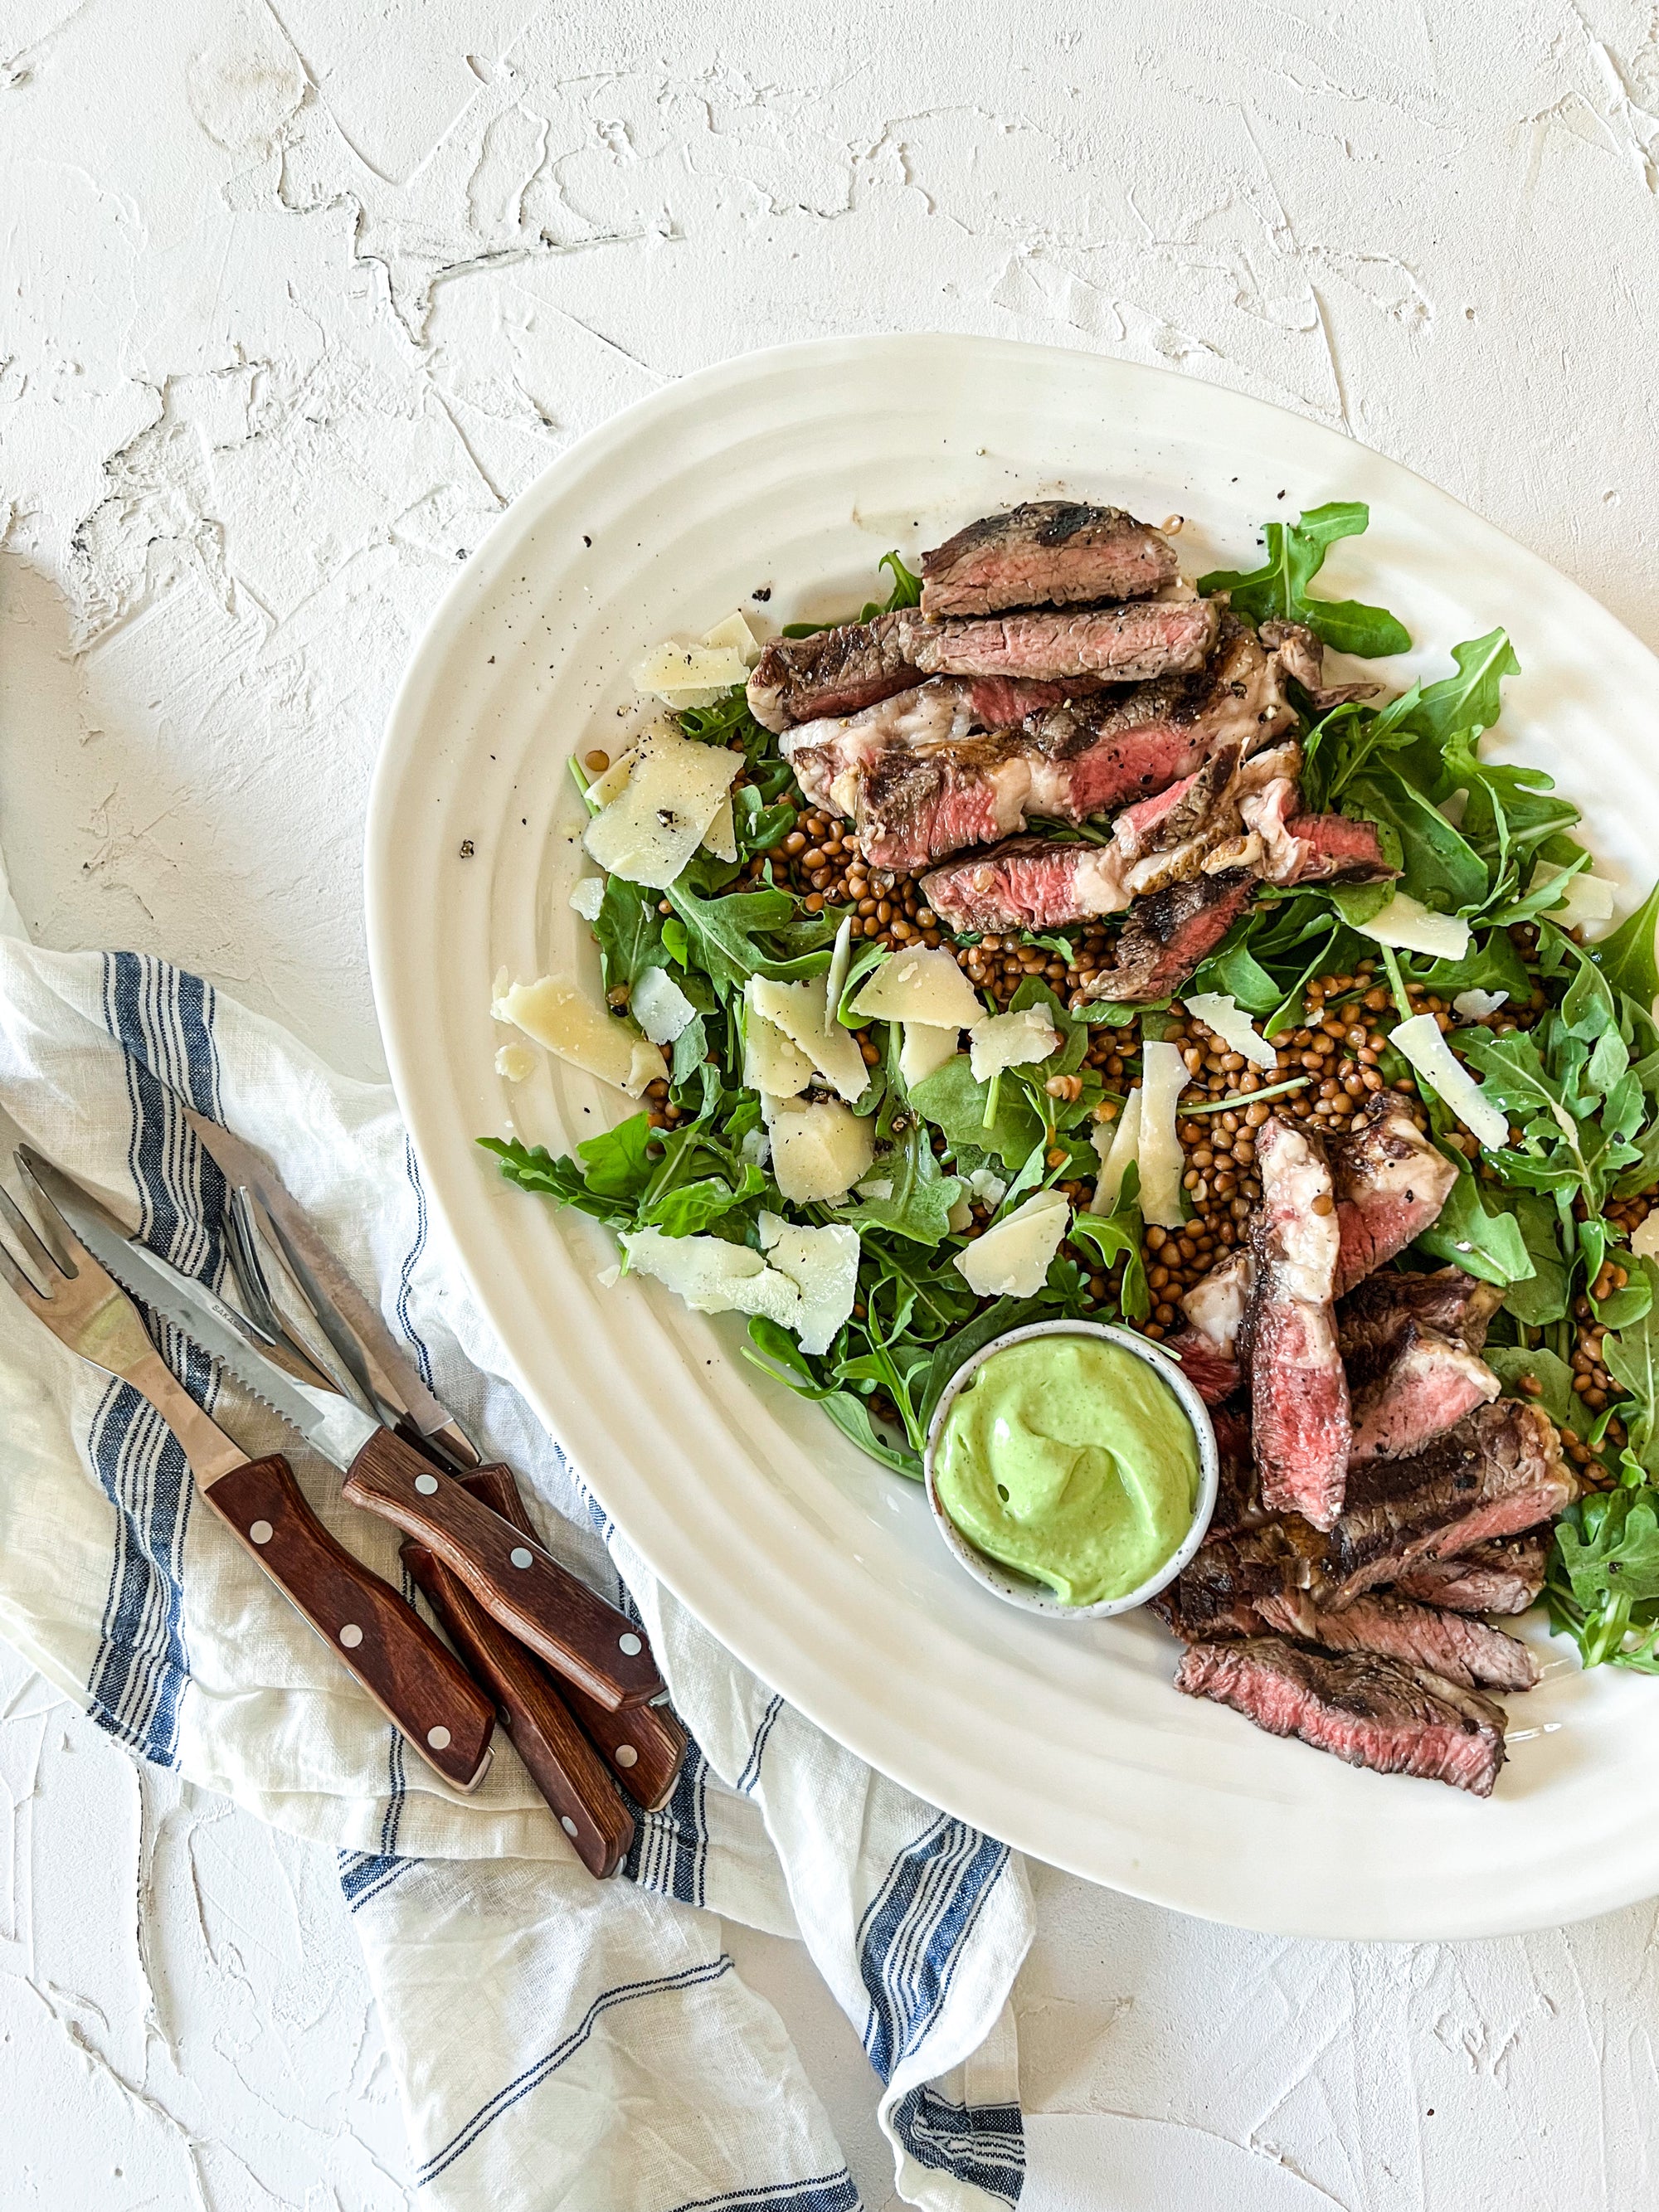 BBQ’d summer steak rocket parmesan salad with creamy herby dressing